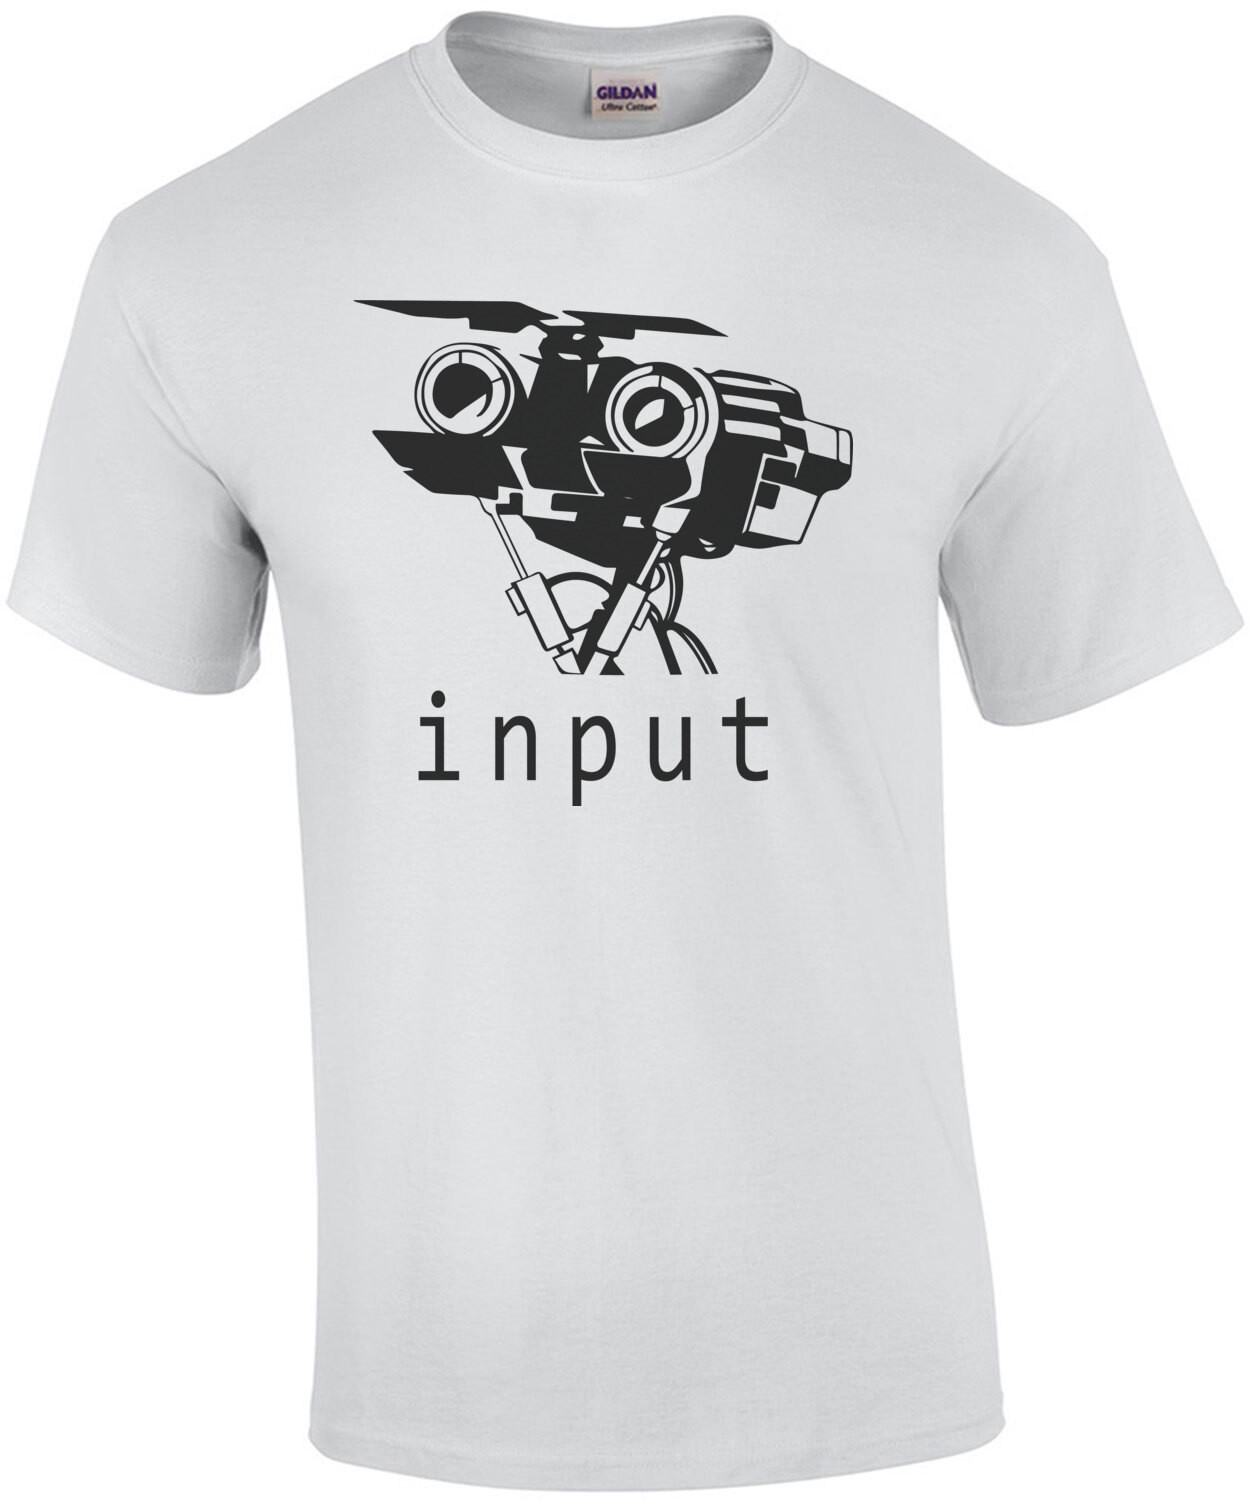 Input - Short Circuit - 80's T-Shirt